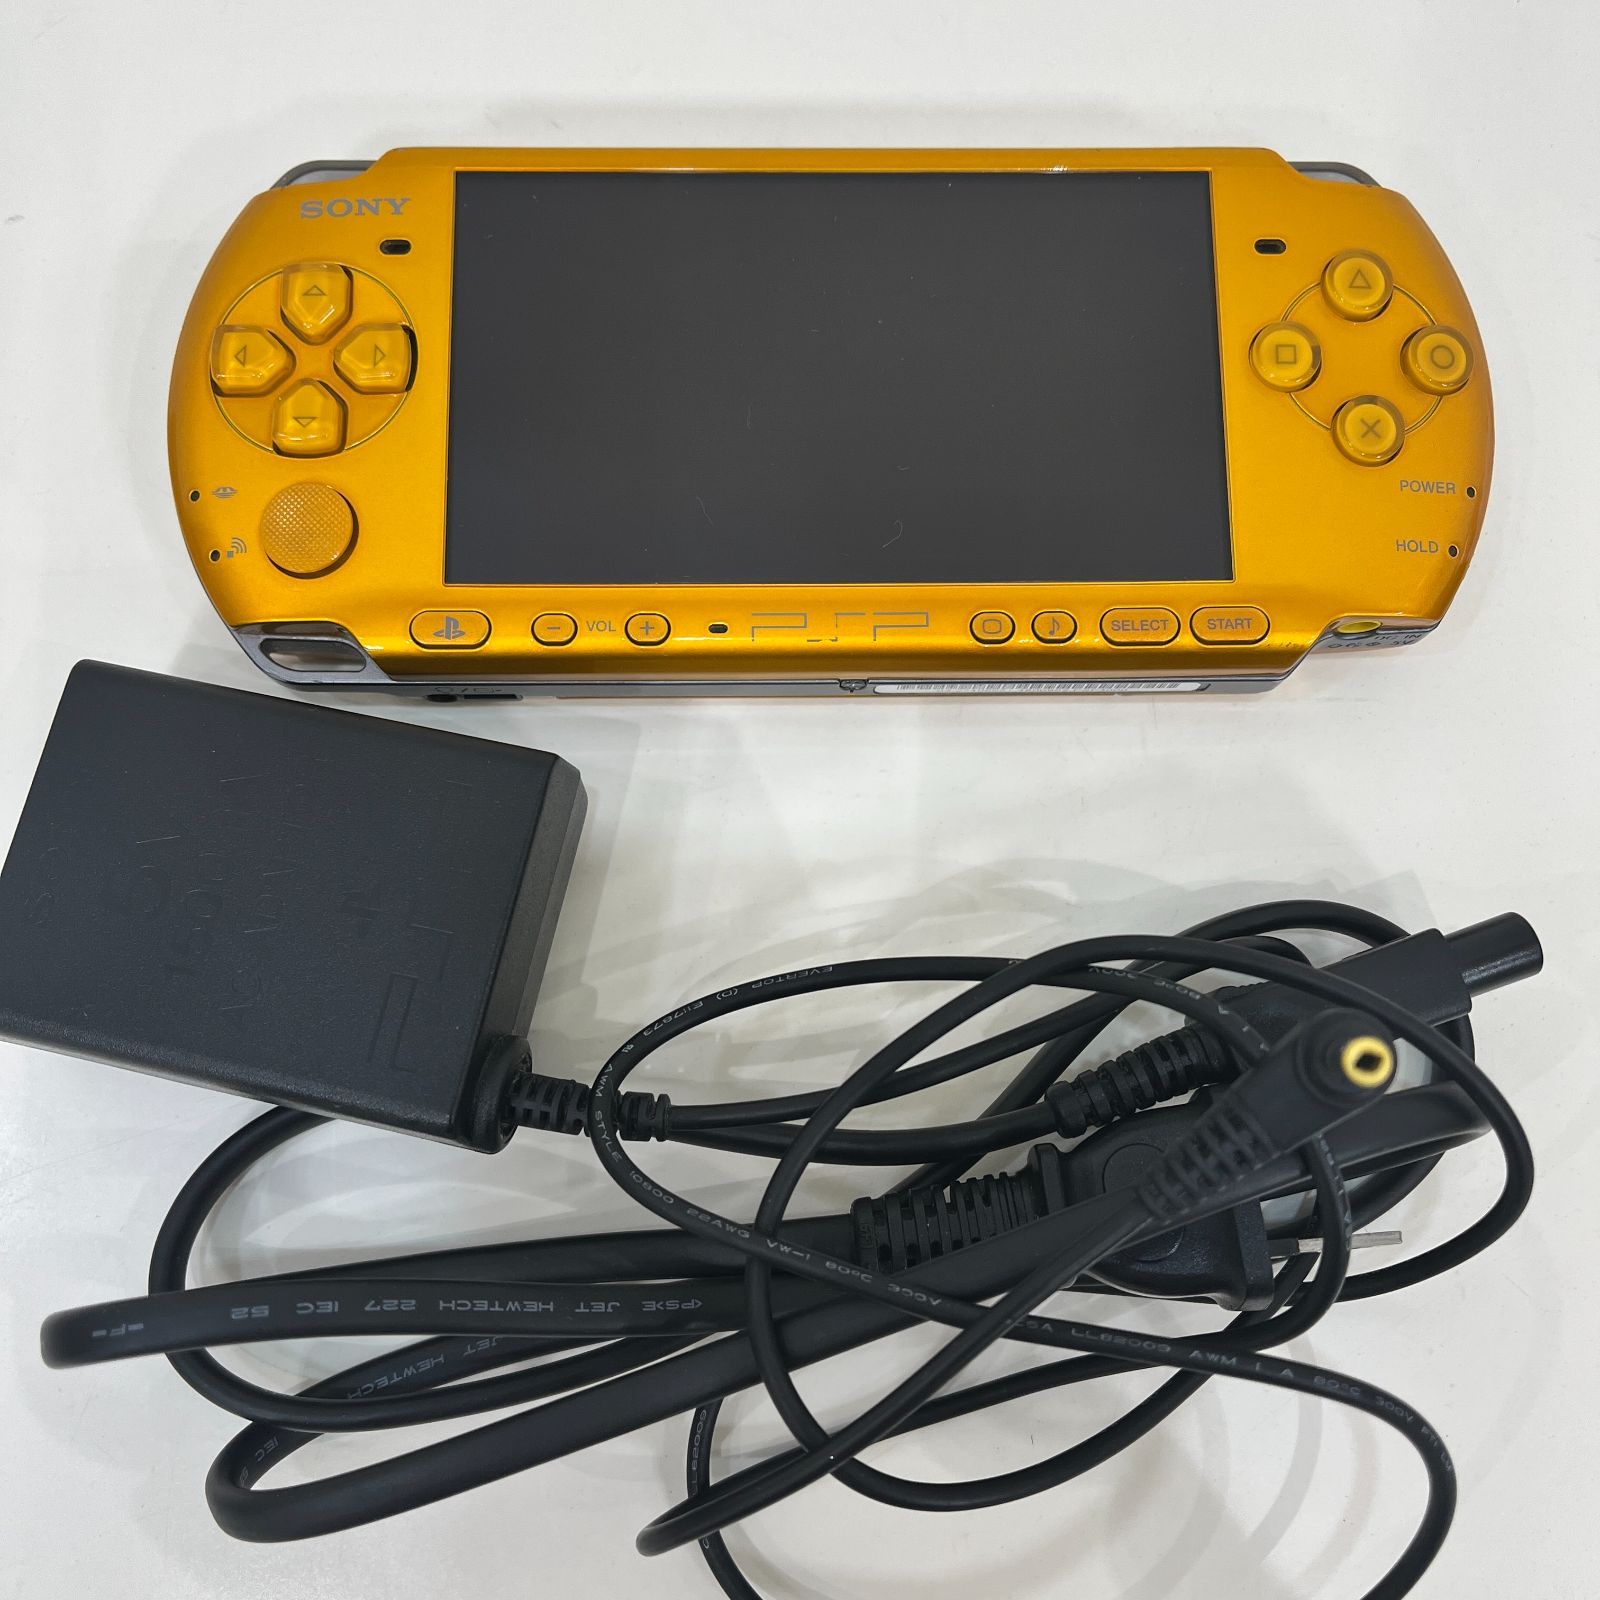 A【中古】SONY ソニー PSP 3000 本体 充電コード イエロー - メルカリ